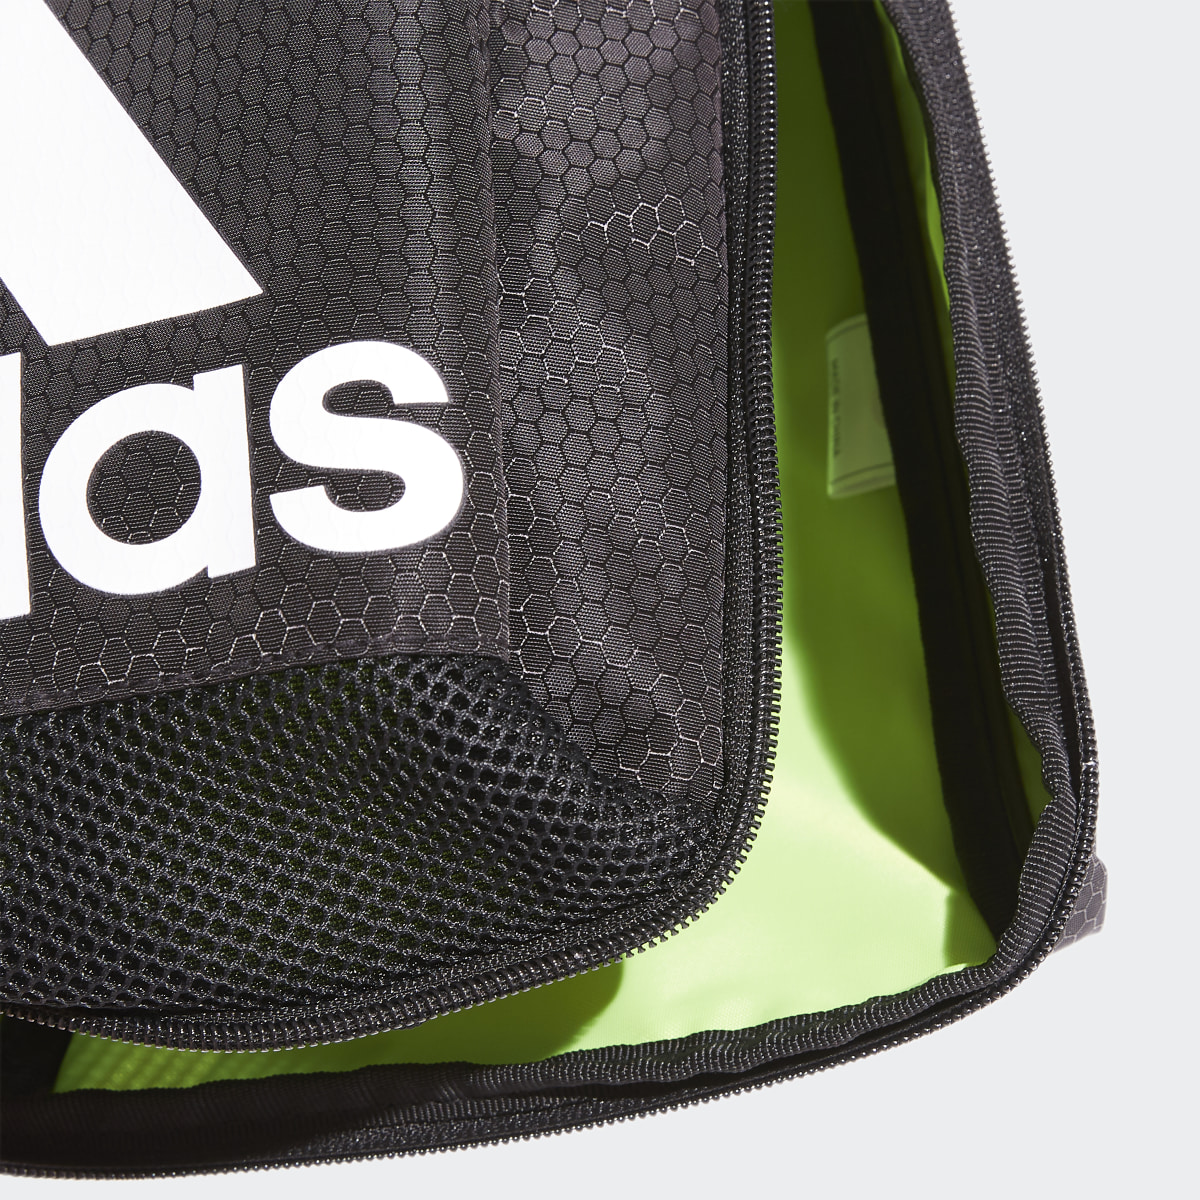 Adidas Stadium Team Glove Bag. 5